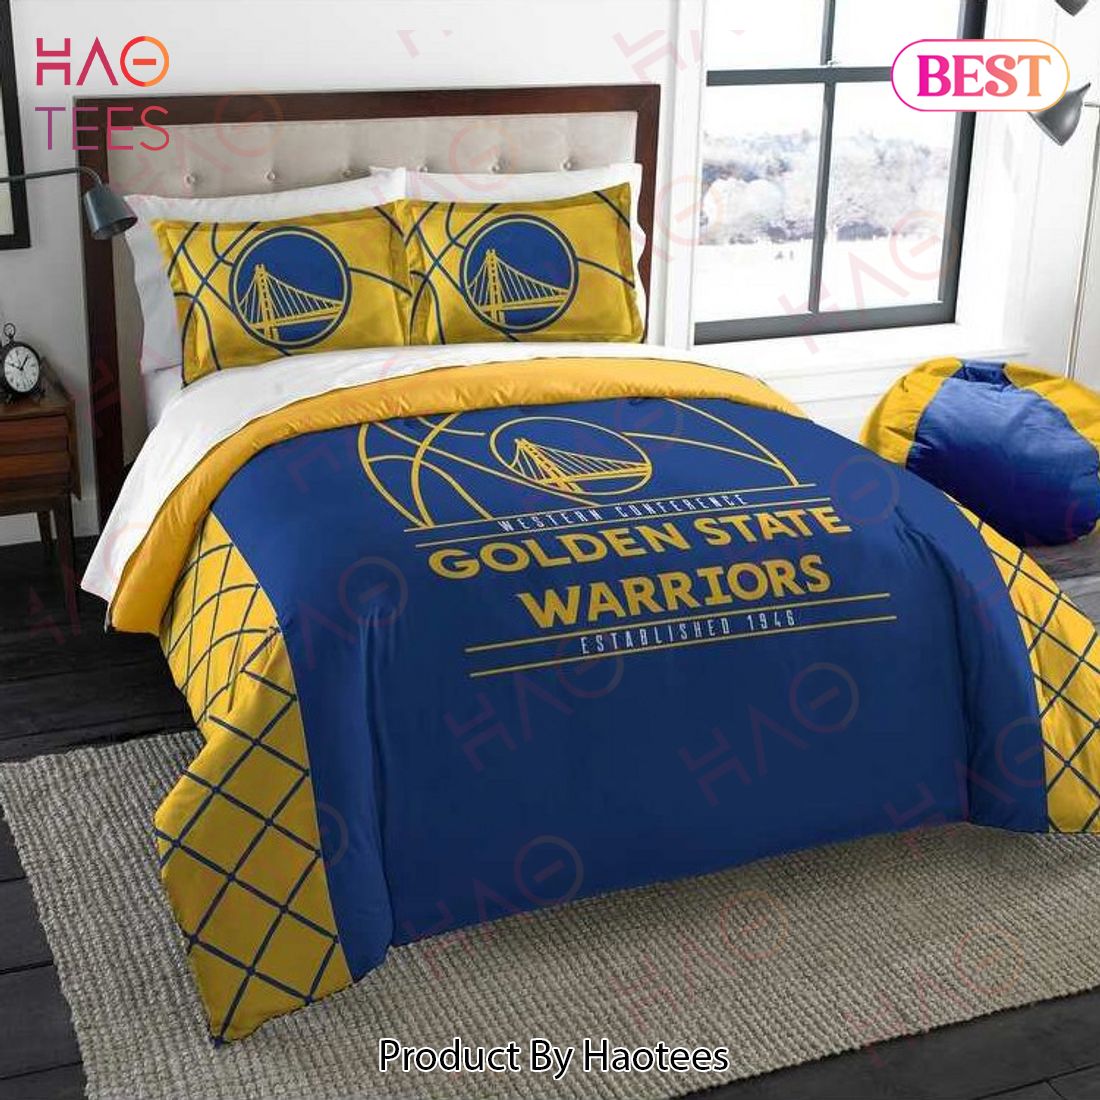 HOT NBA Golden State Warriors Bedding Duvet Cover Limited Edition POD Design